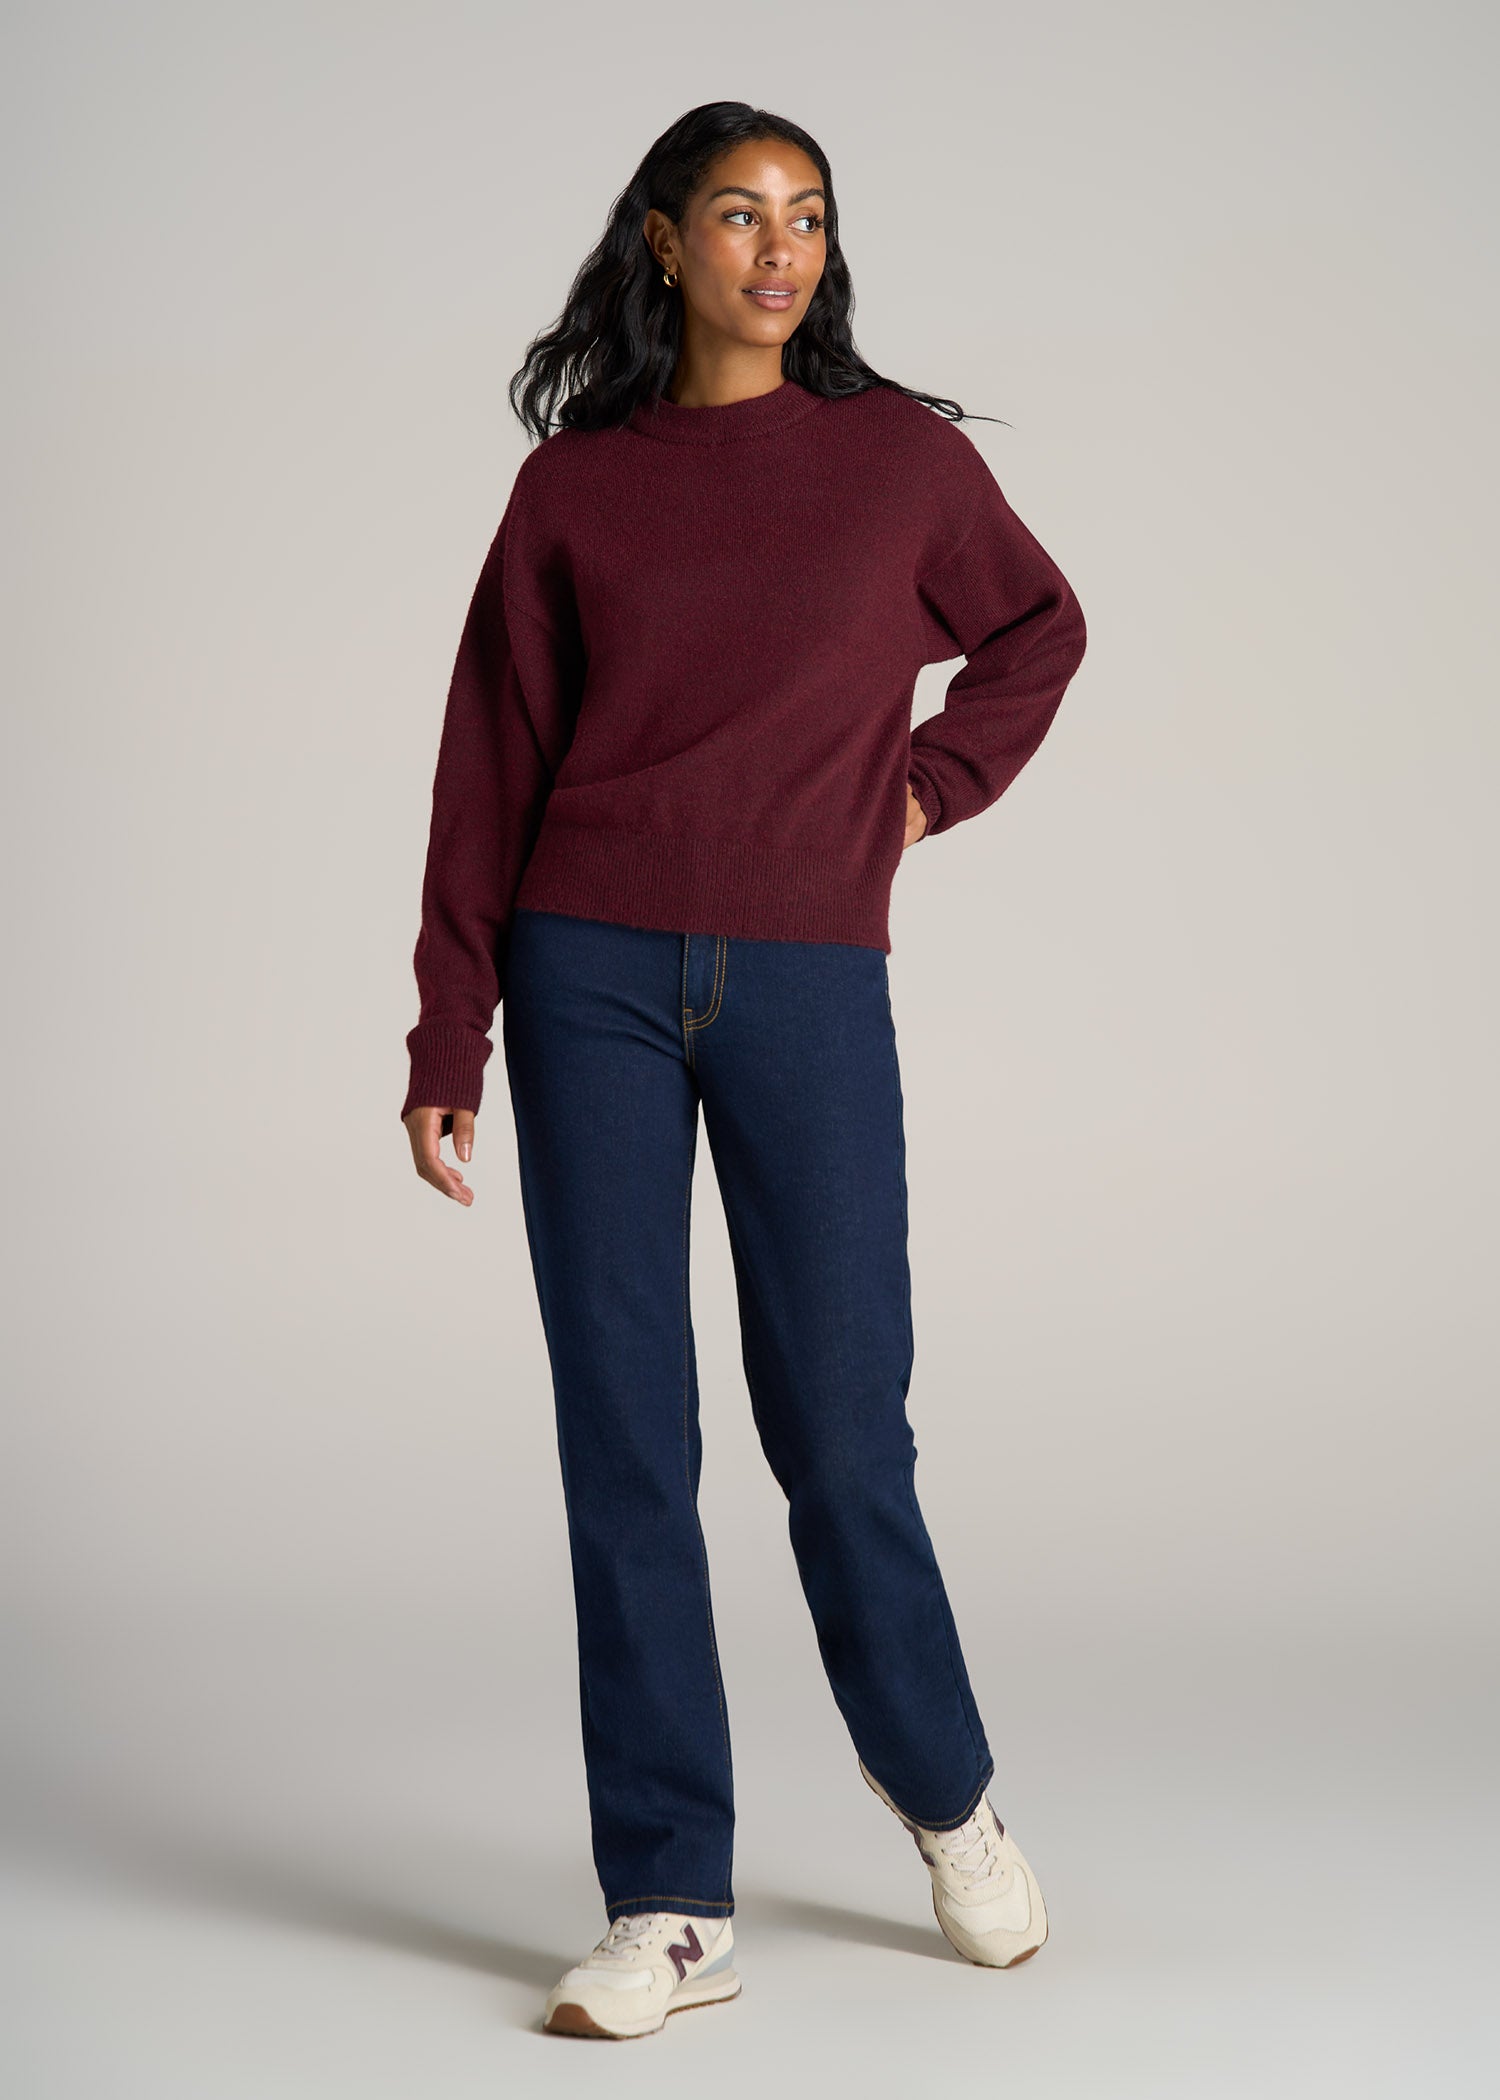 Relaxed Crewneck Wool Blend Tall Women's Sweater | American Tall